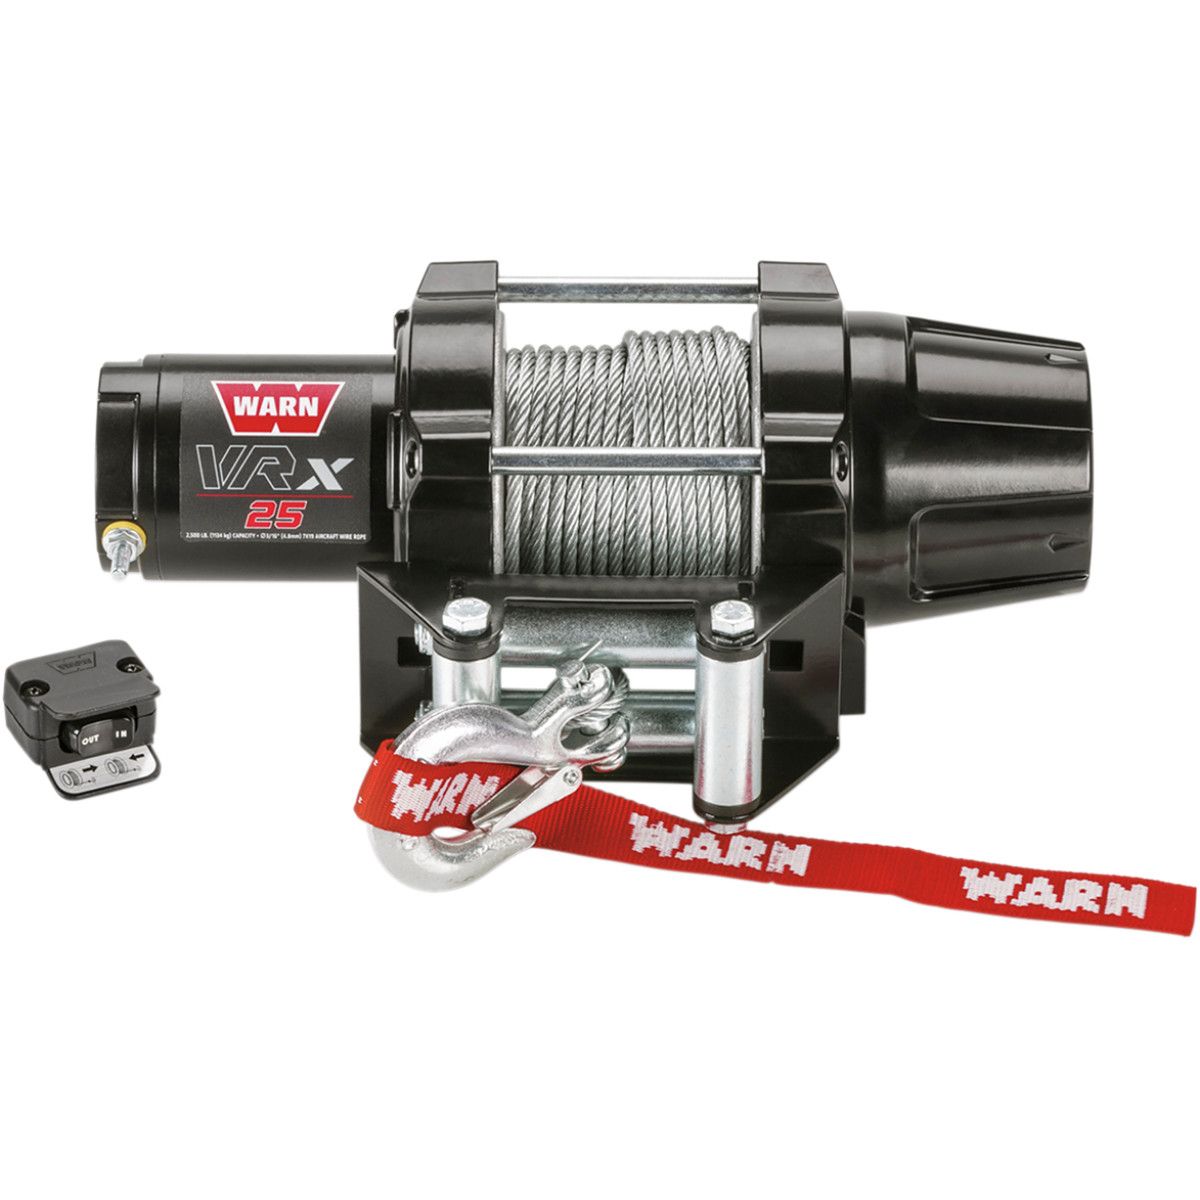 Troliu ATV Warn Winch VRX 25 1134 kg (2500 lb) - 15,2m QUAD